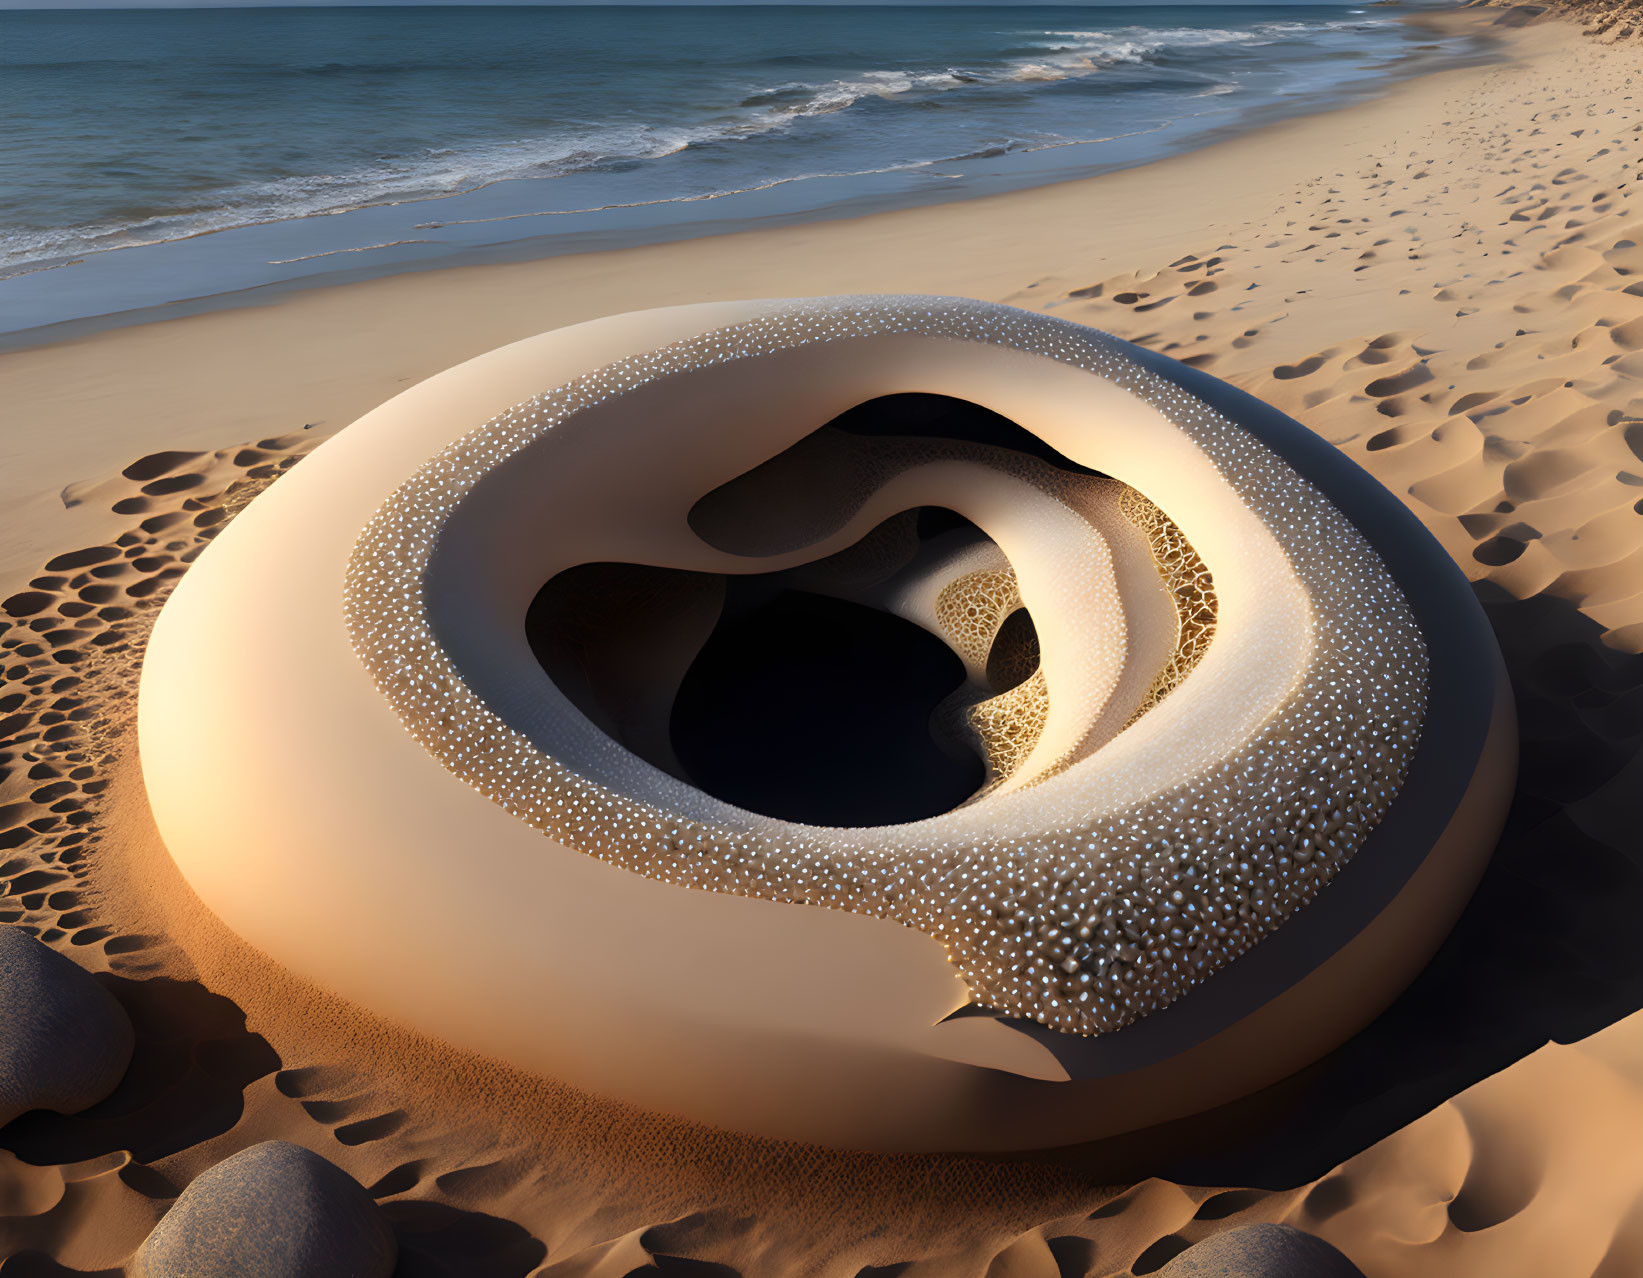 Surreal torus-shaped sculpture on sandy beach with granular texture